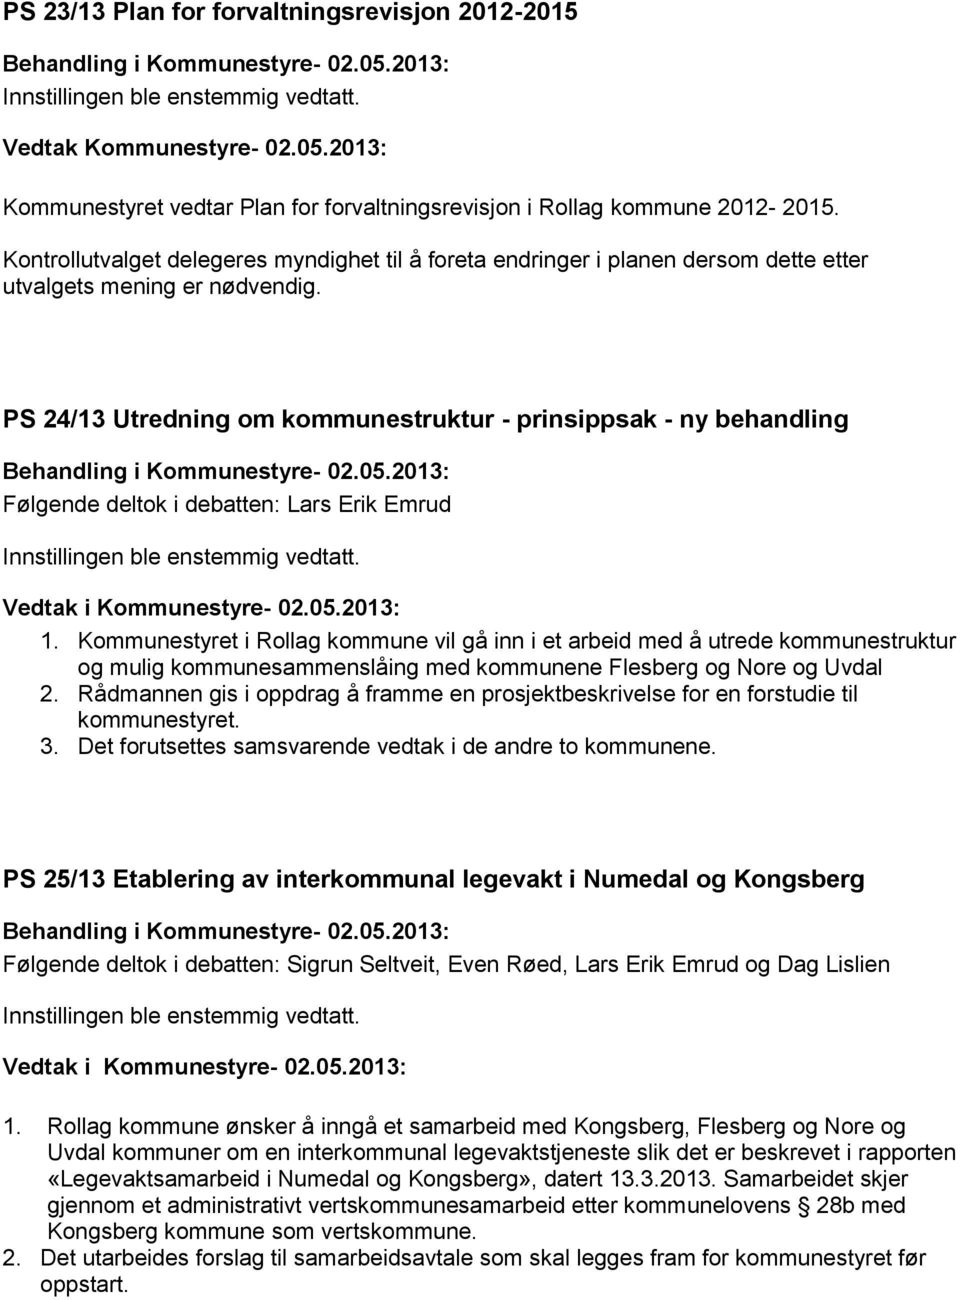 PS 24/13 Utredning om kommunestruktur - prinsippsak - ny behandling Følgende deltok i debatten: Lars Erik Emrud 1.